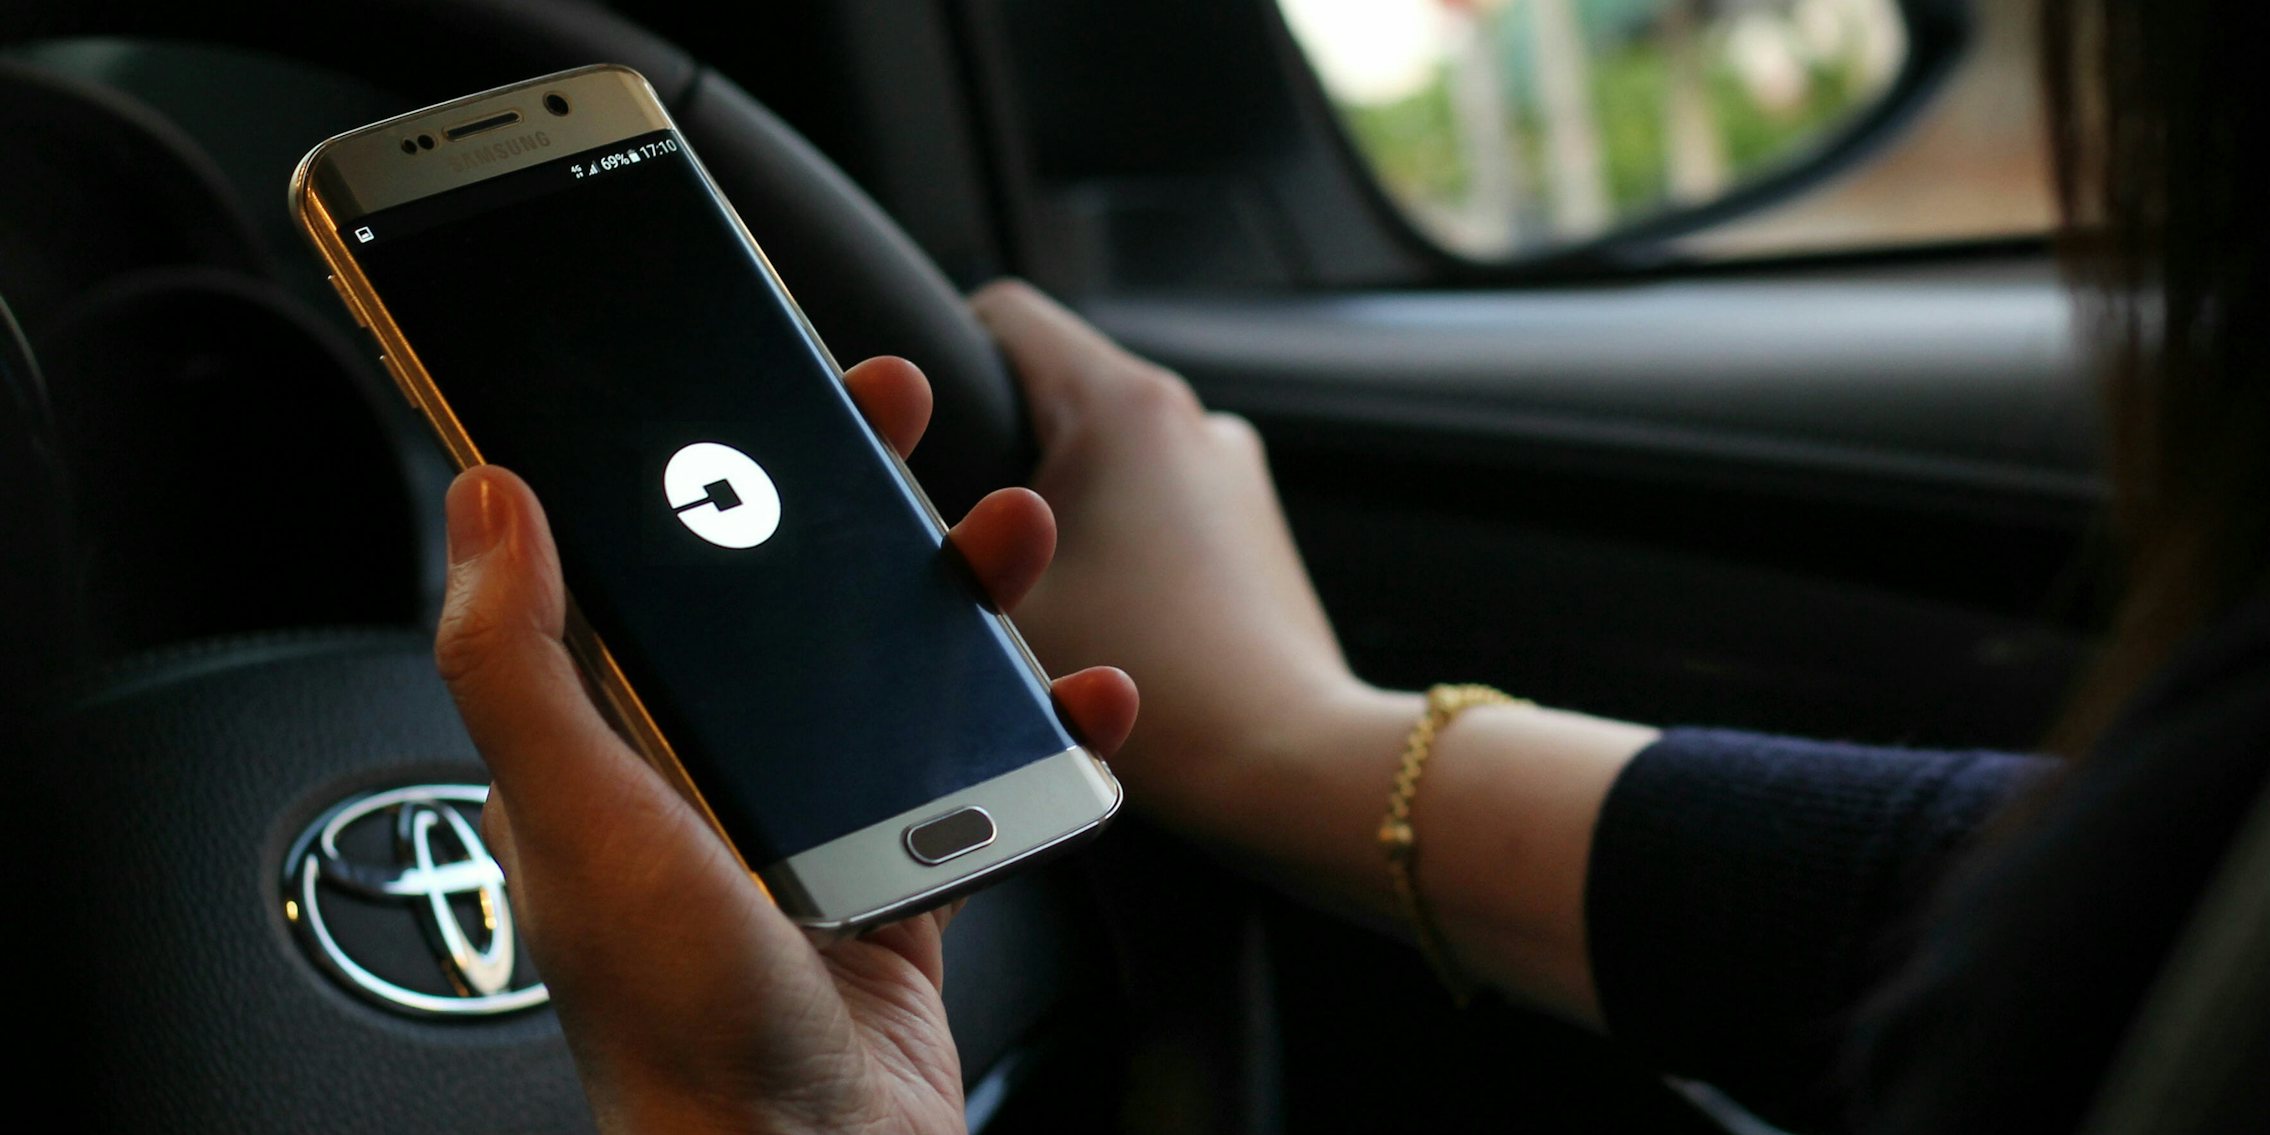 uber smartphone ride hailing app